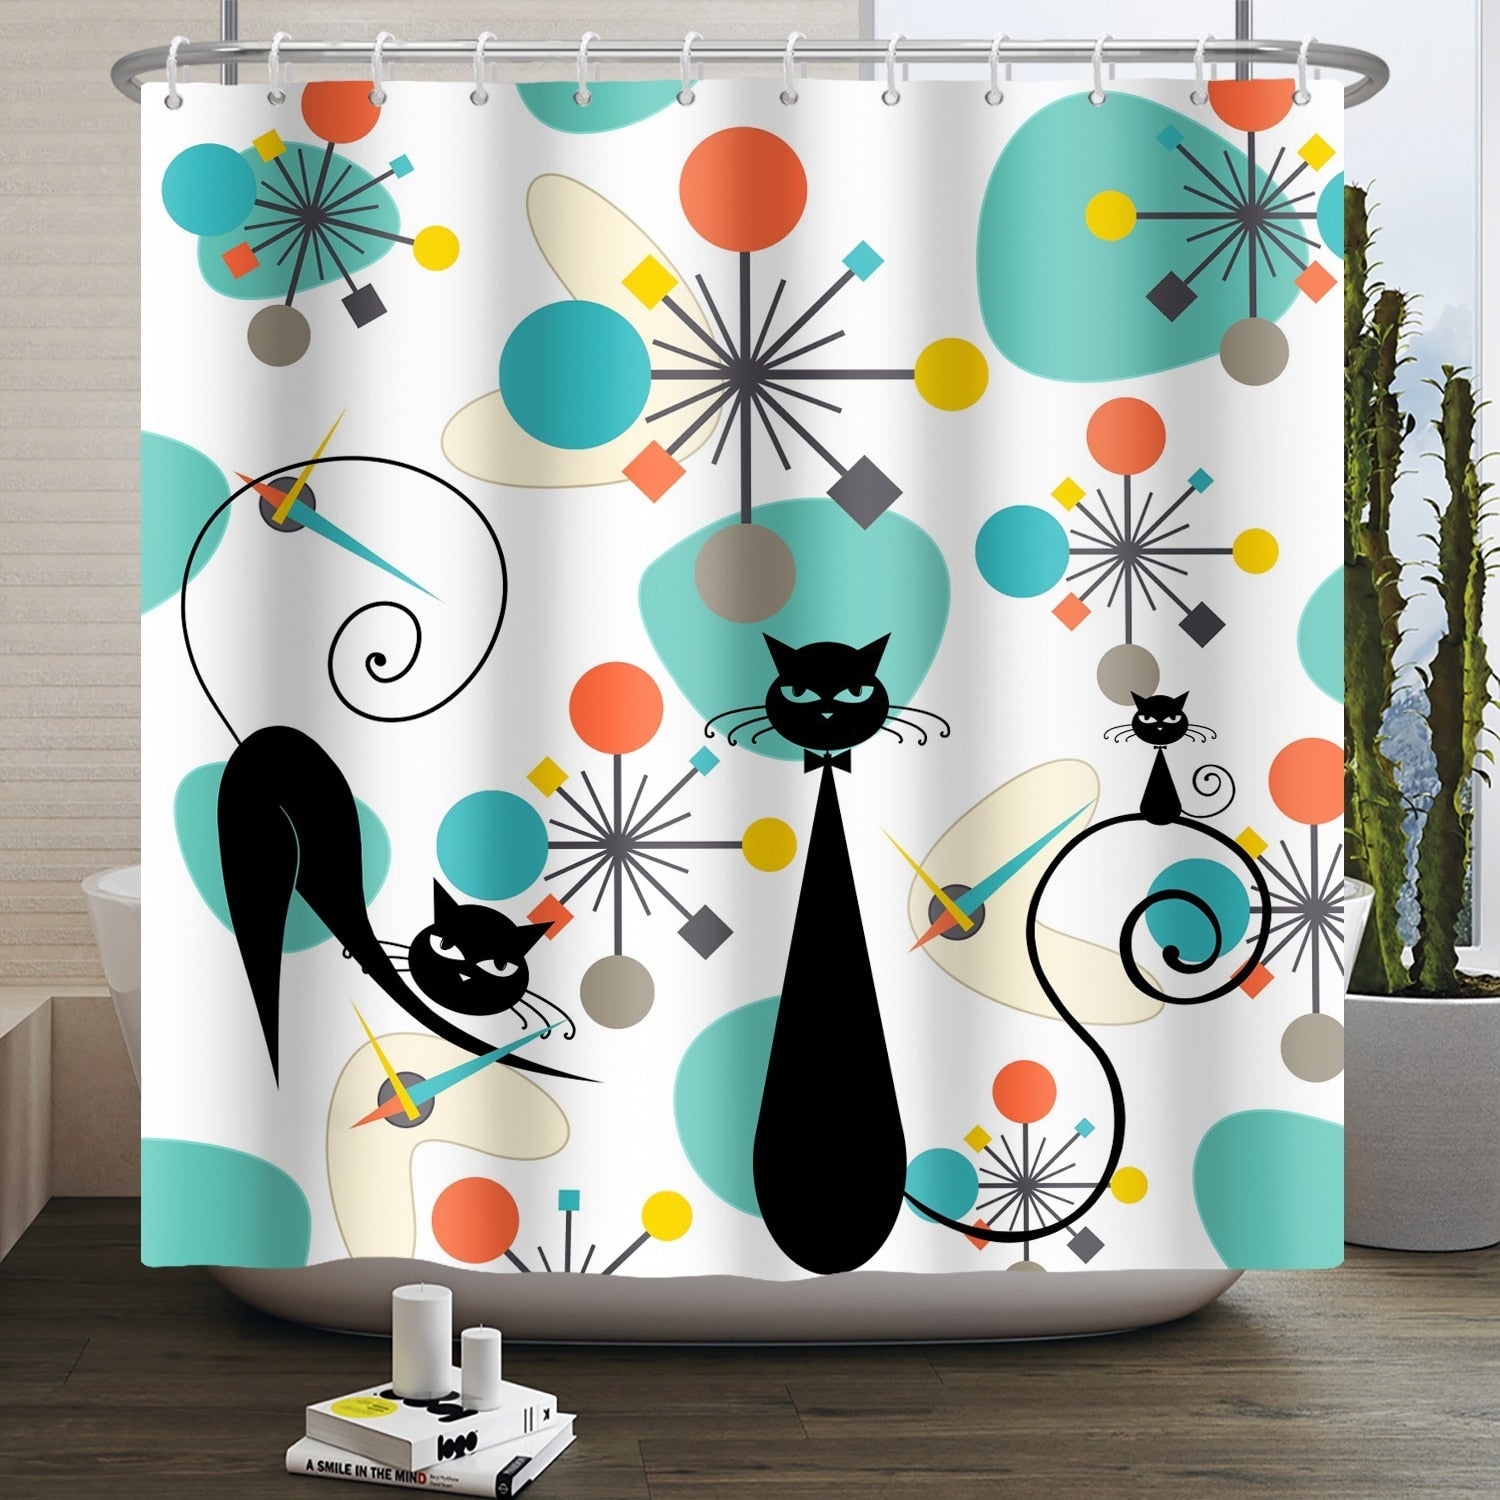 Atomic Cat Shower Curtain - Atomic Cat / W150xH180cm